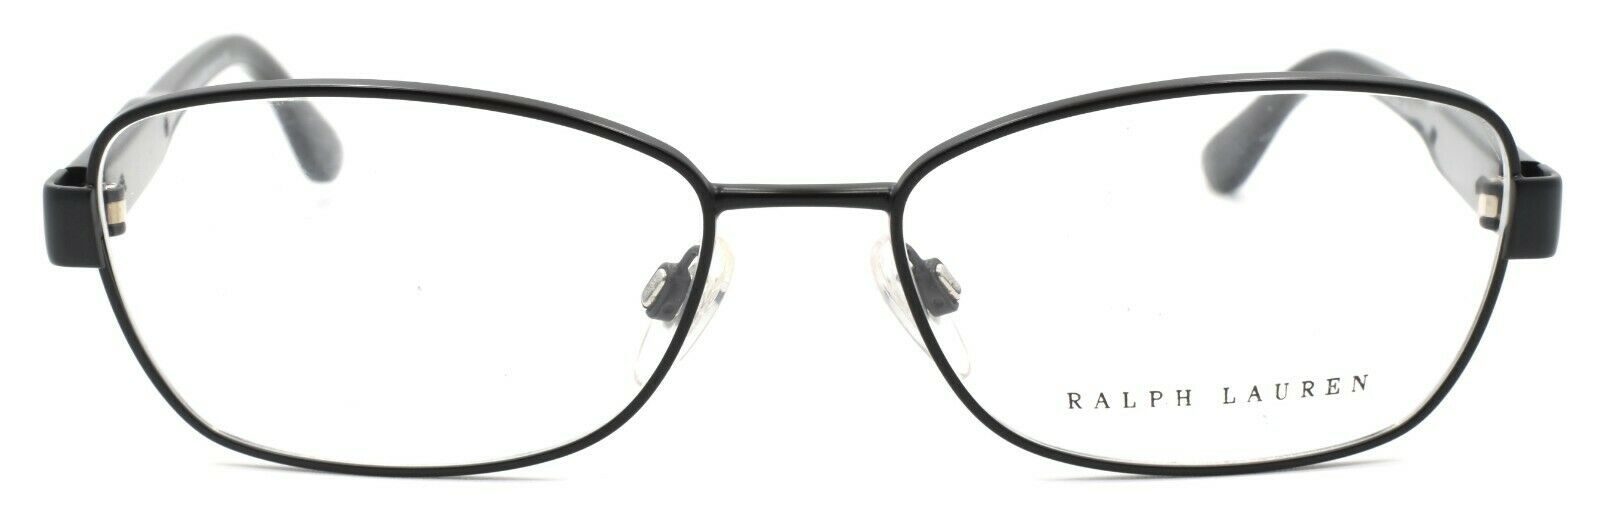 2-Ralph Lauren RL5088 9038 Women's Eyeglasses Frames 51-15-140 Matte Black ITALY-8053672232400-IKSpecs